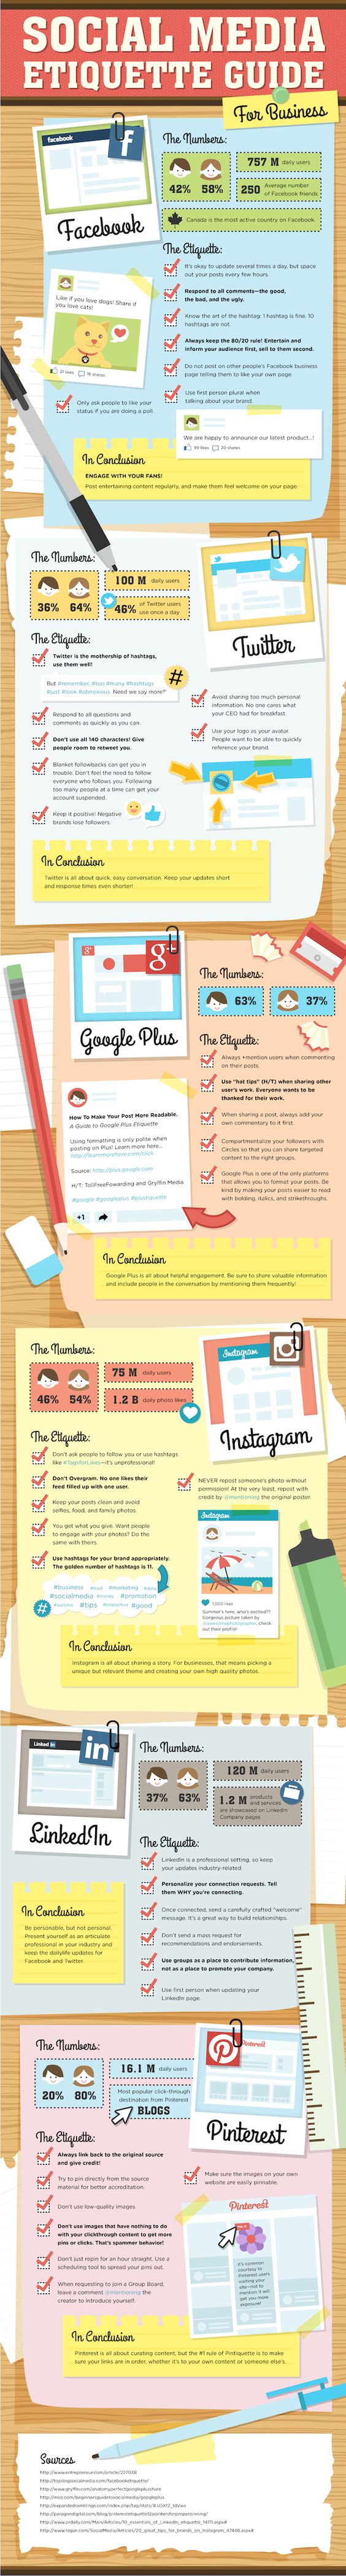 A Guide To Proper Etiquette On Social Media